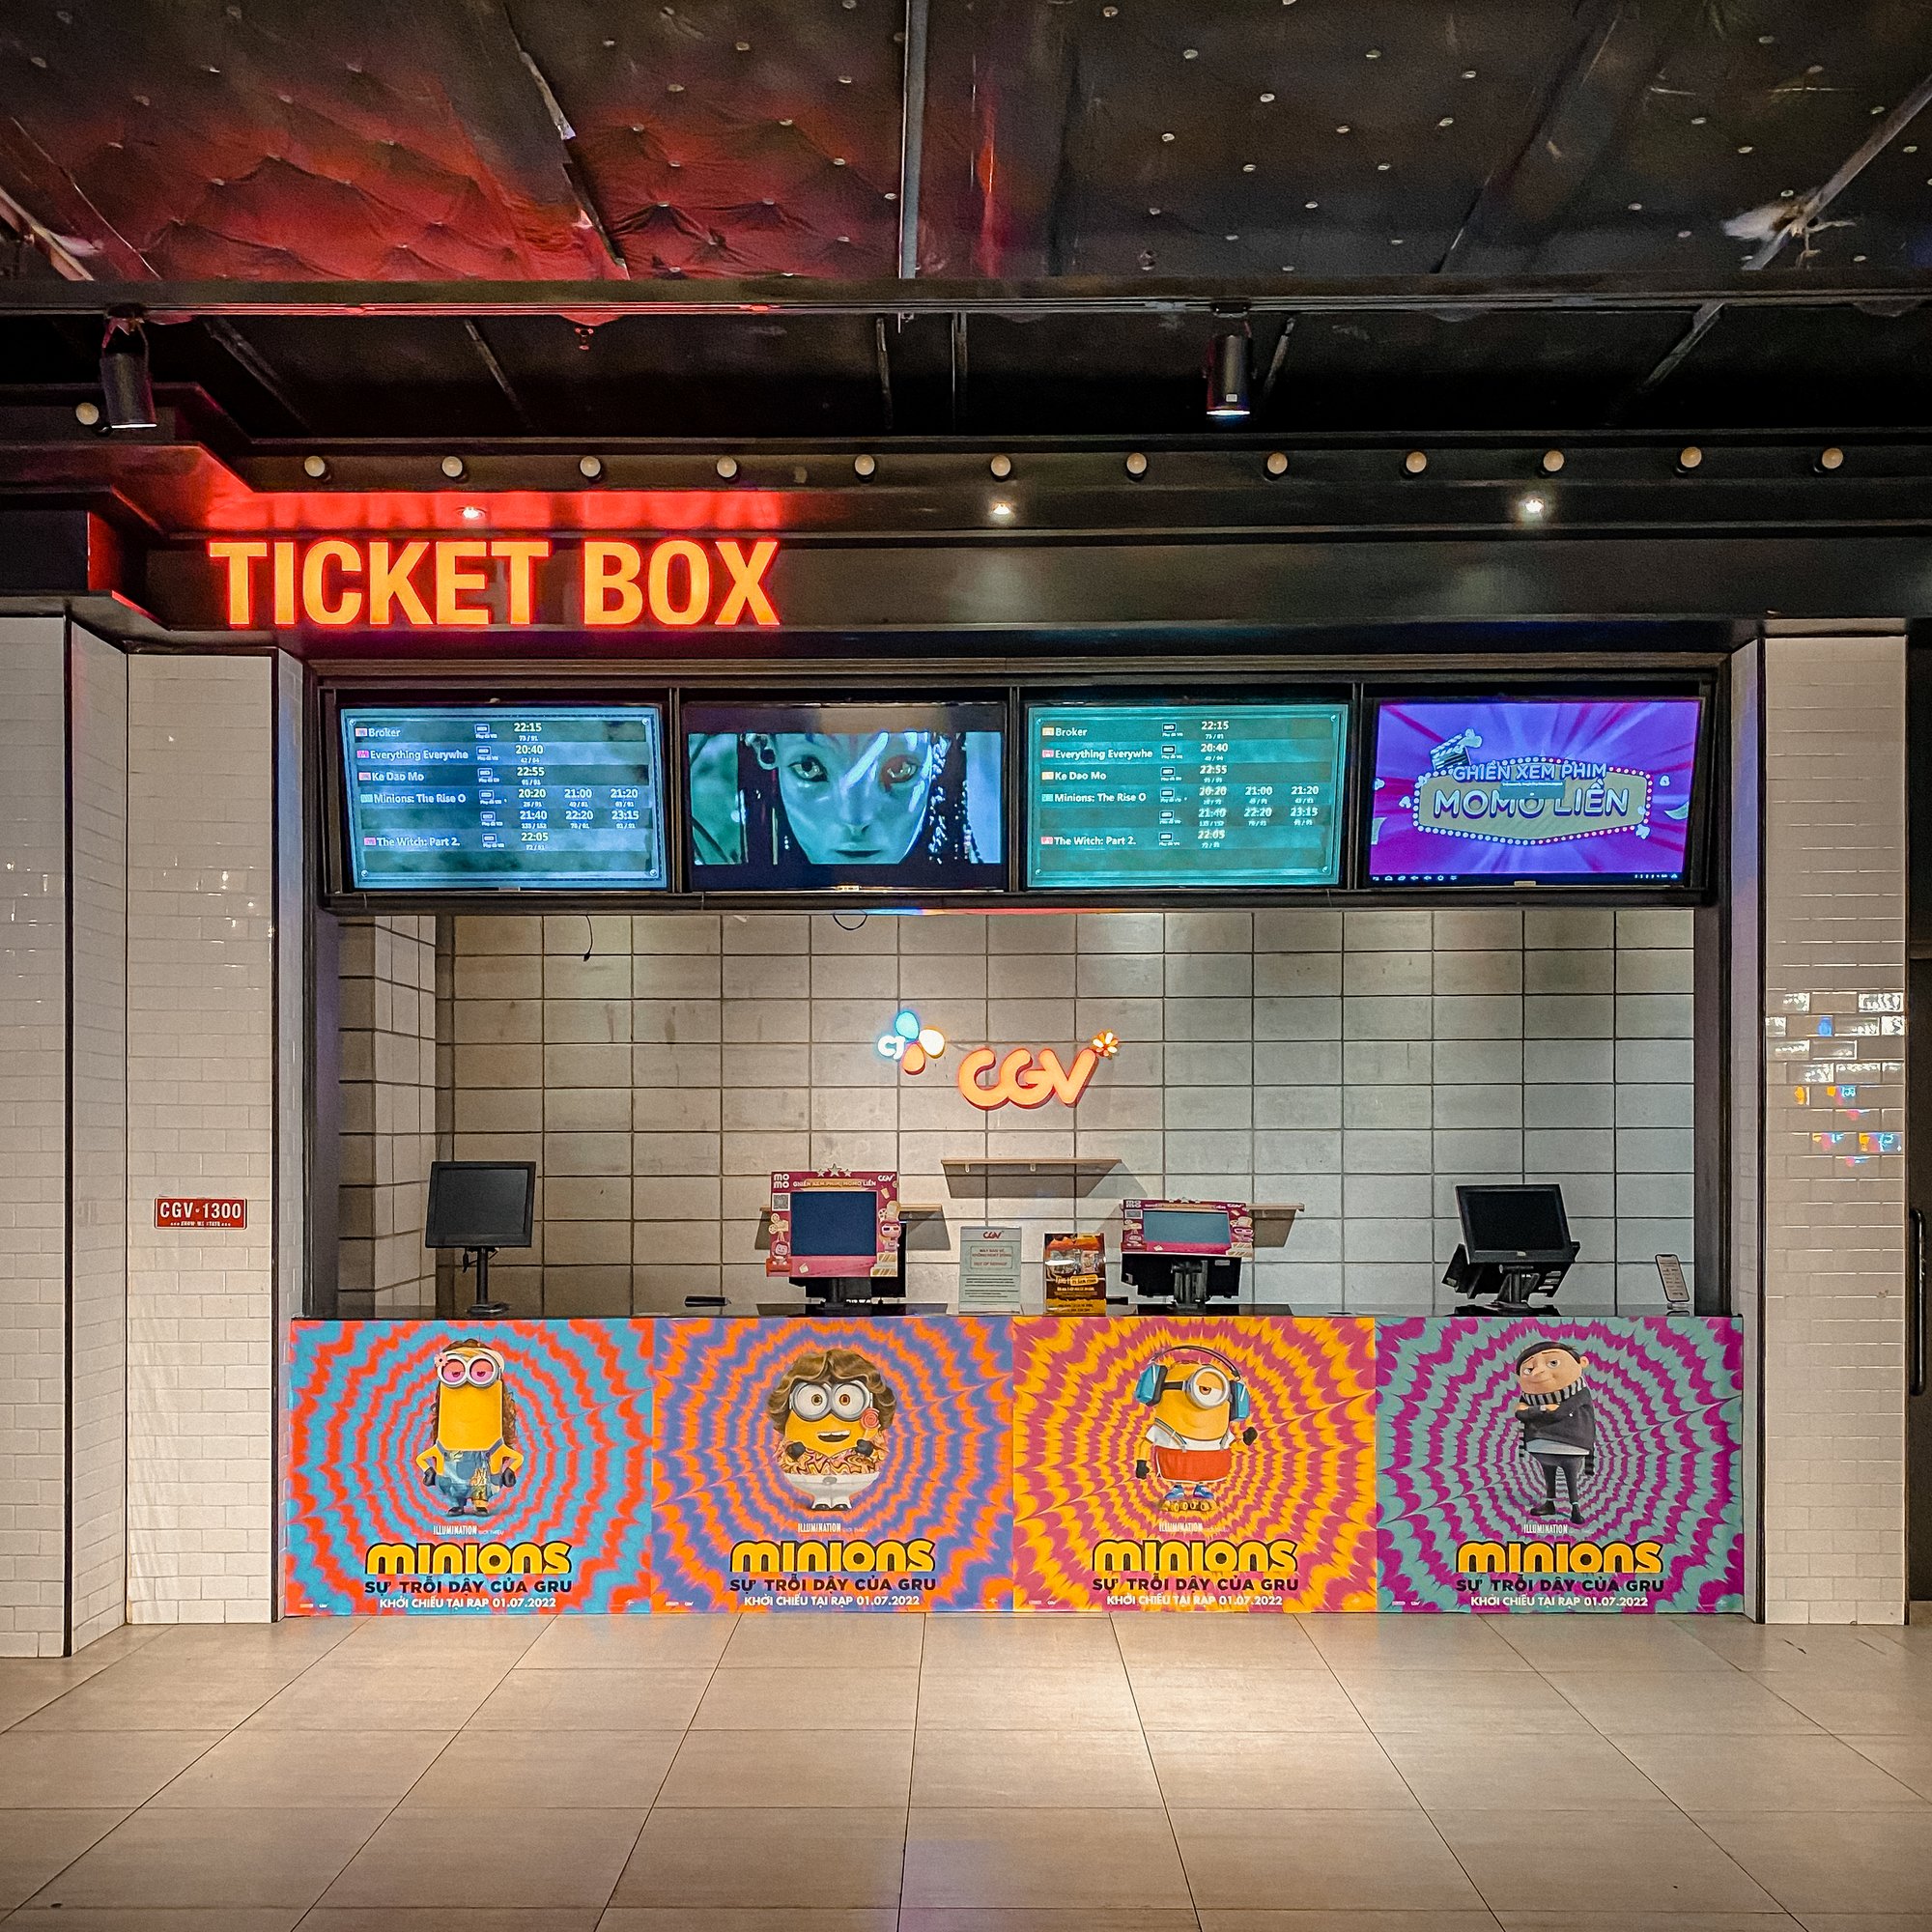 A cinema ticket box